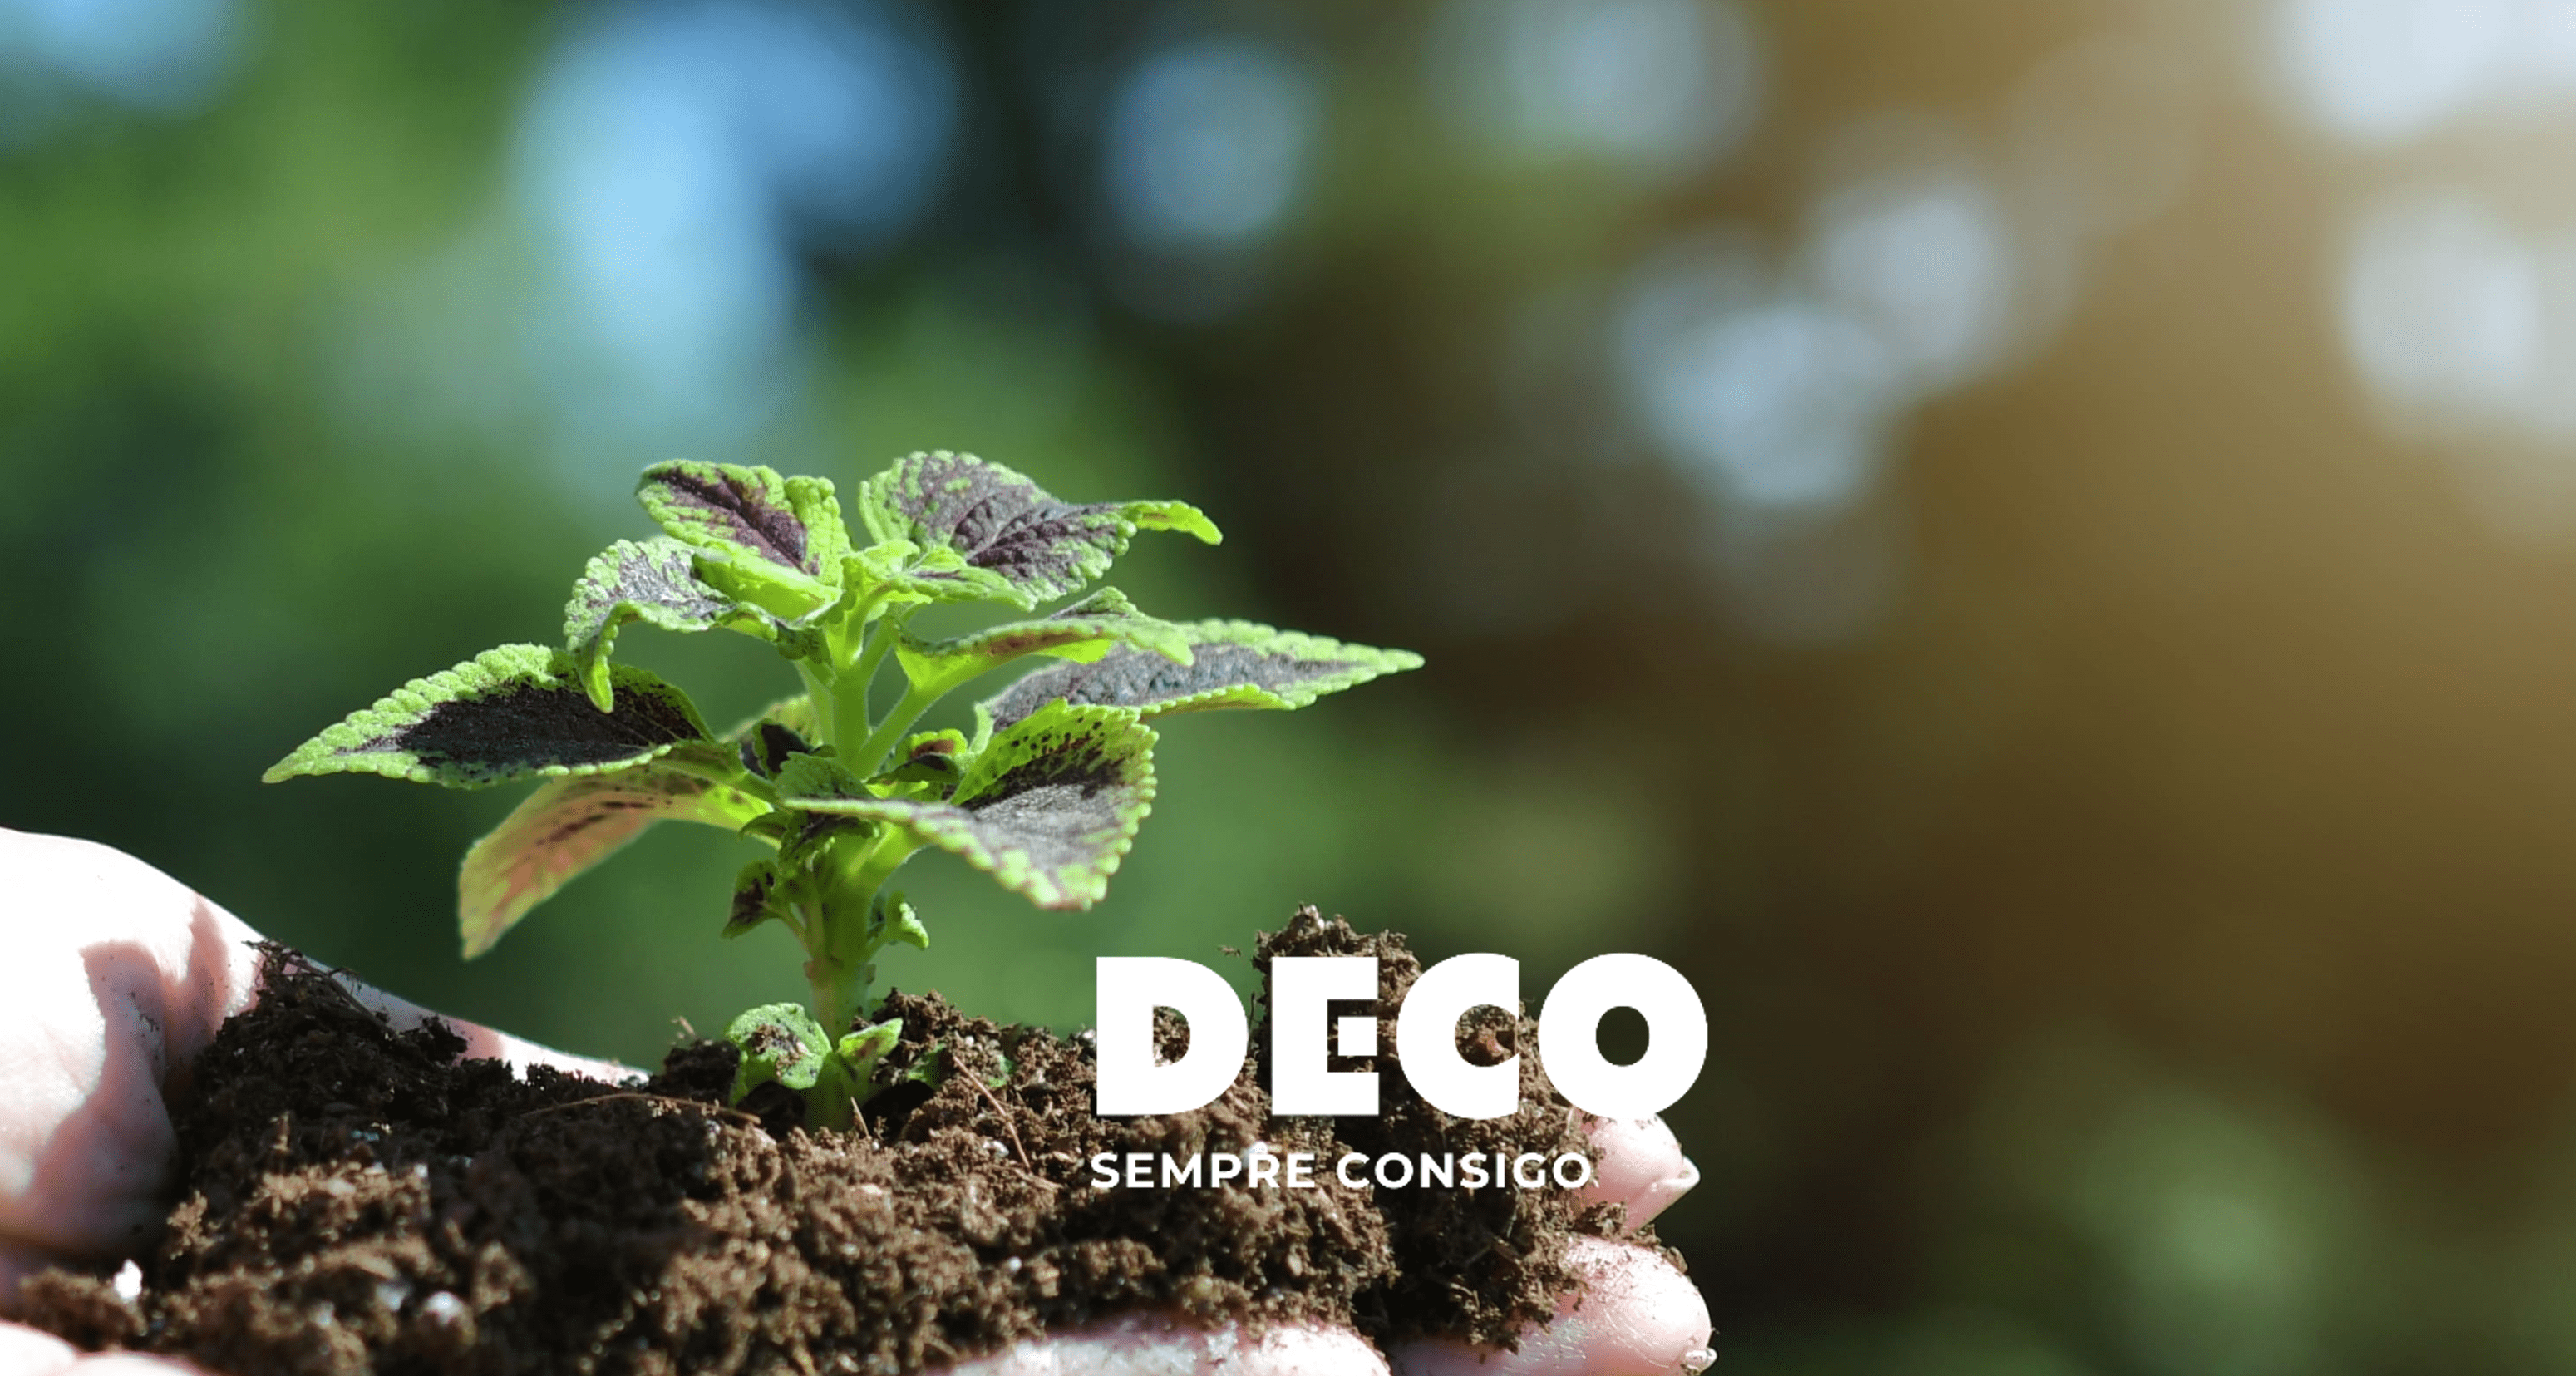 DECO disponibiliza workshops na área da sustentabilidade